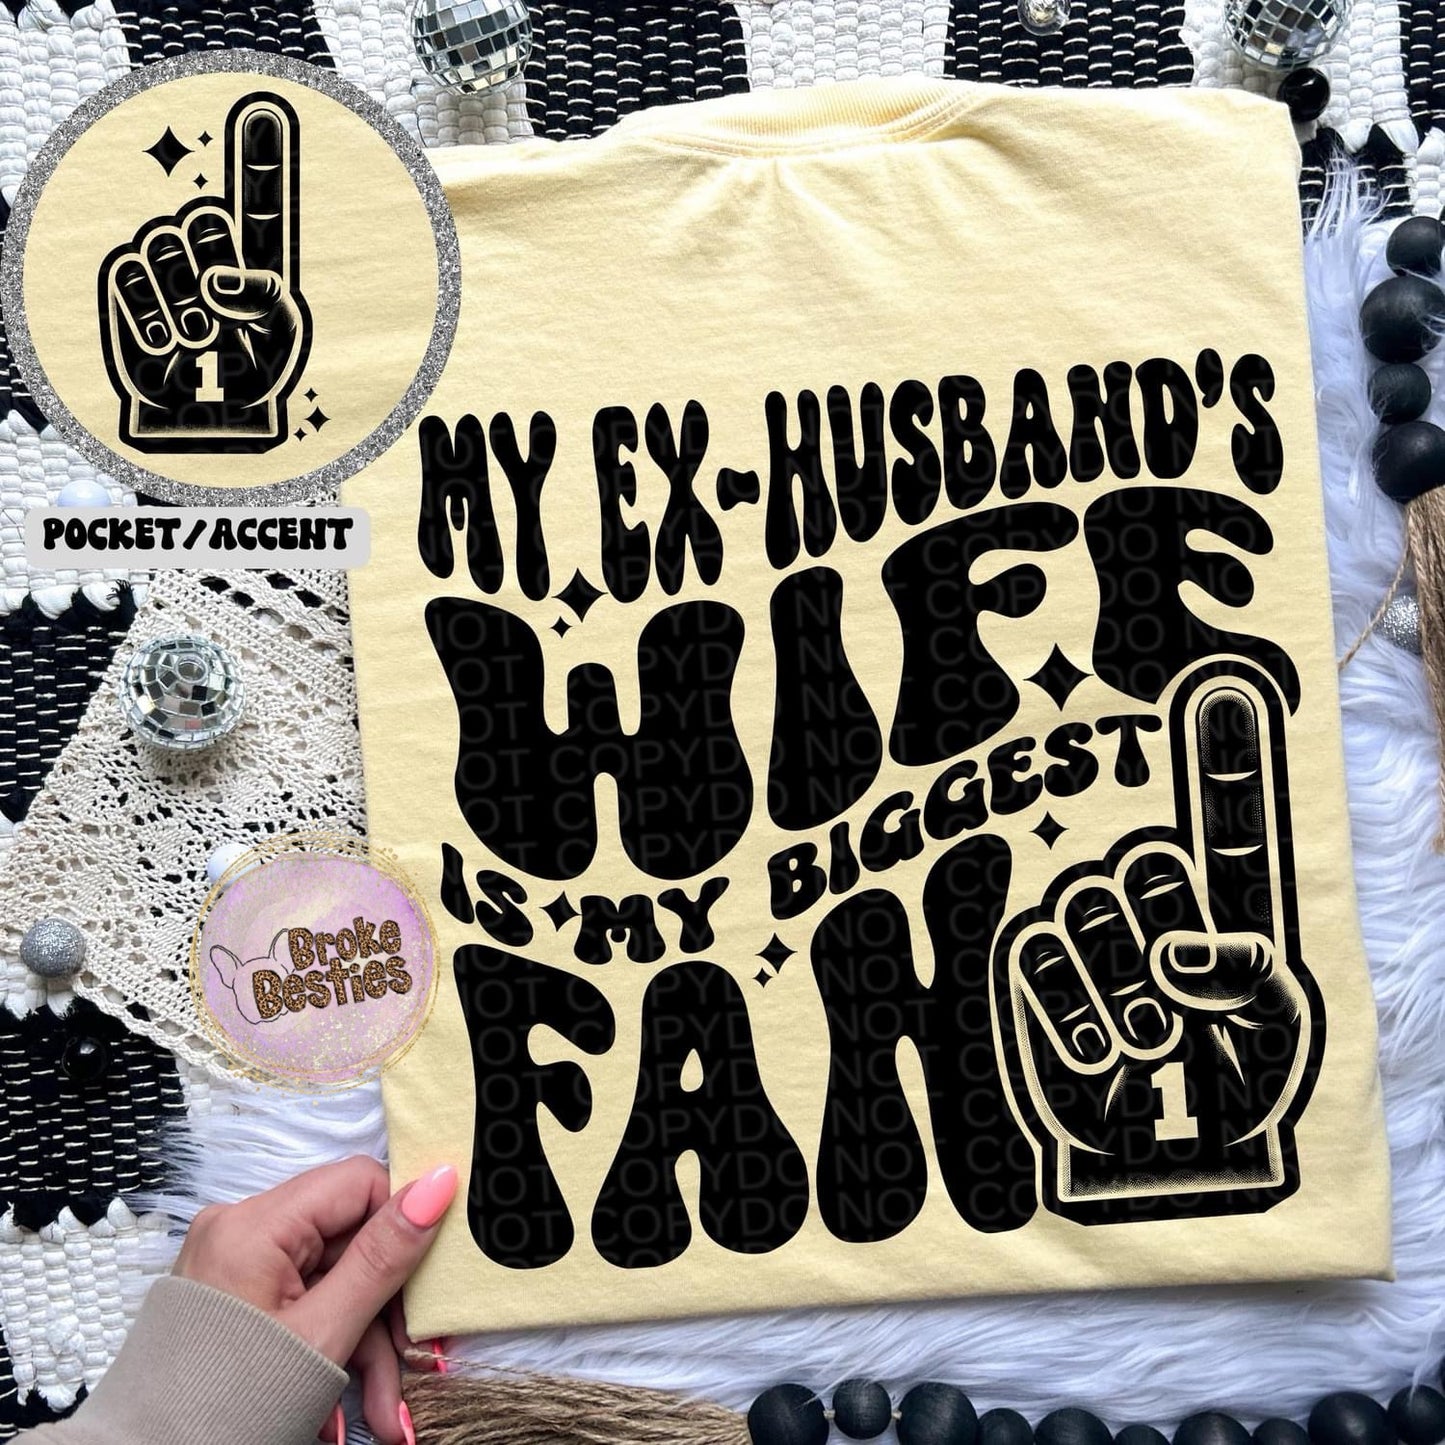 My Biggest Fan (Ex-Husband Versions)